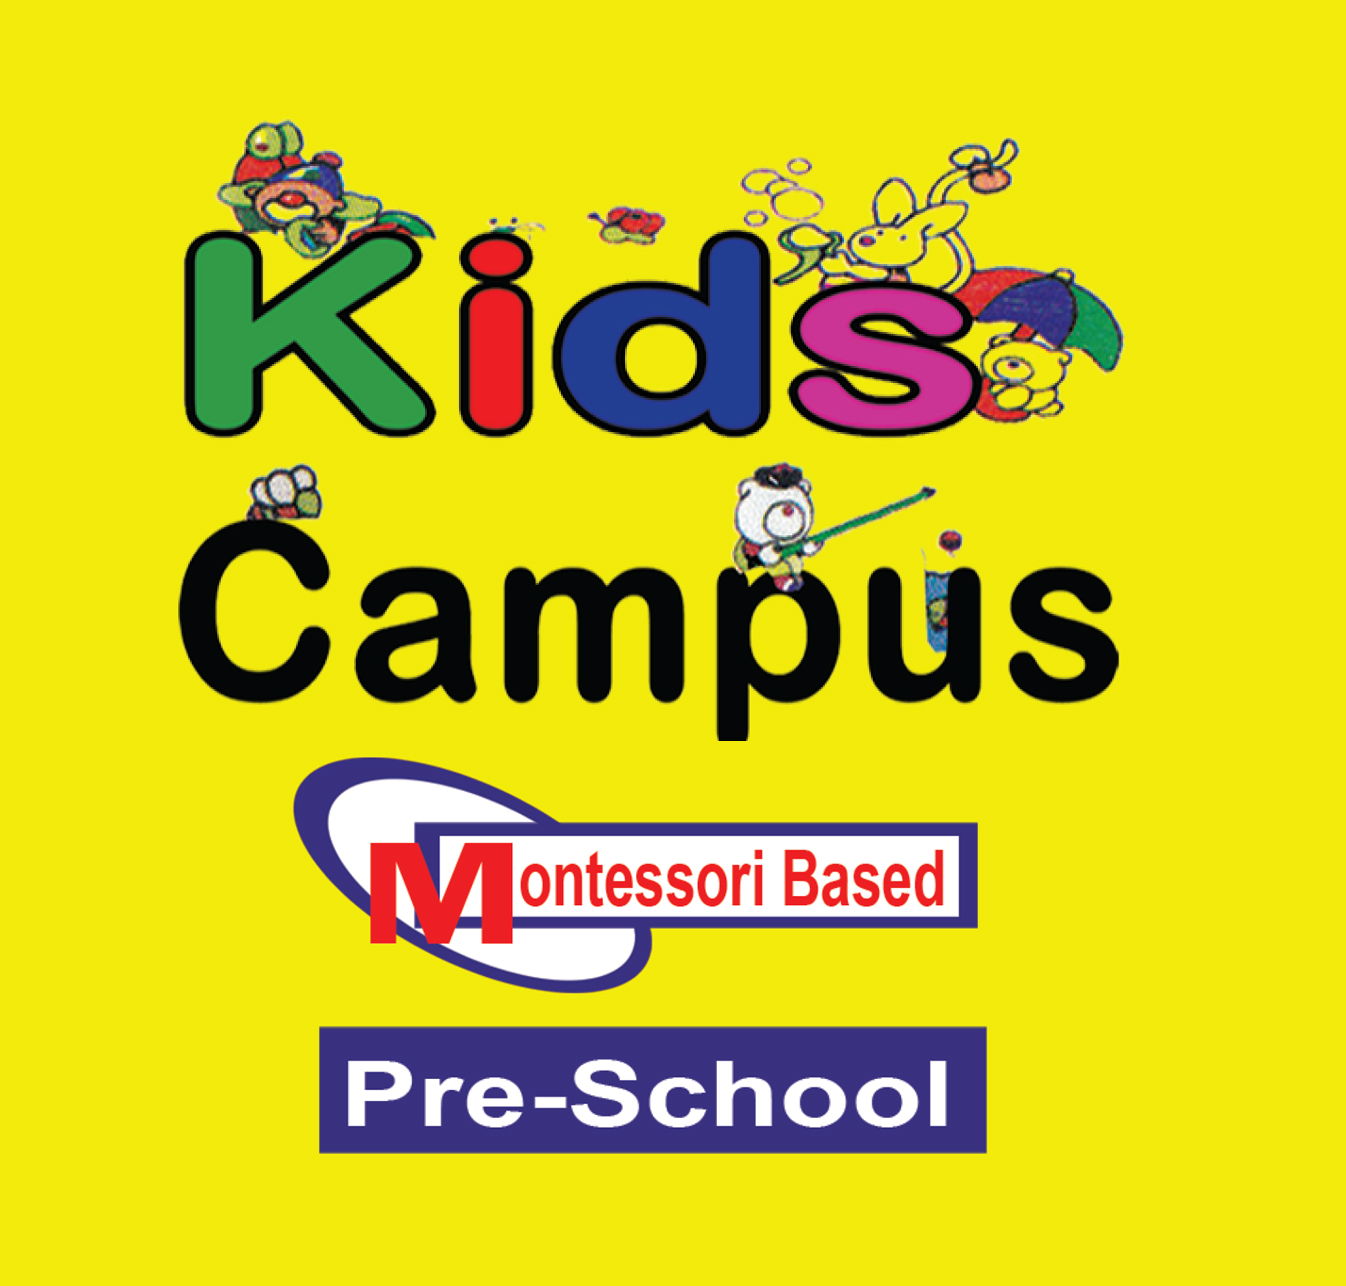 Kids Campus